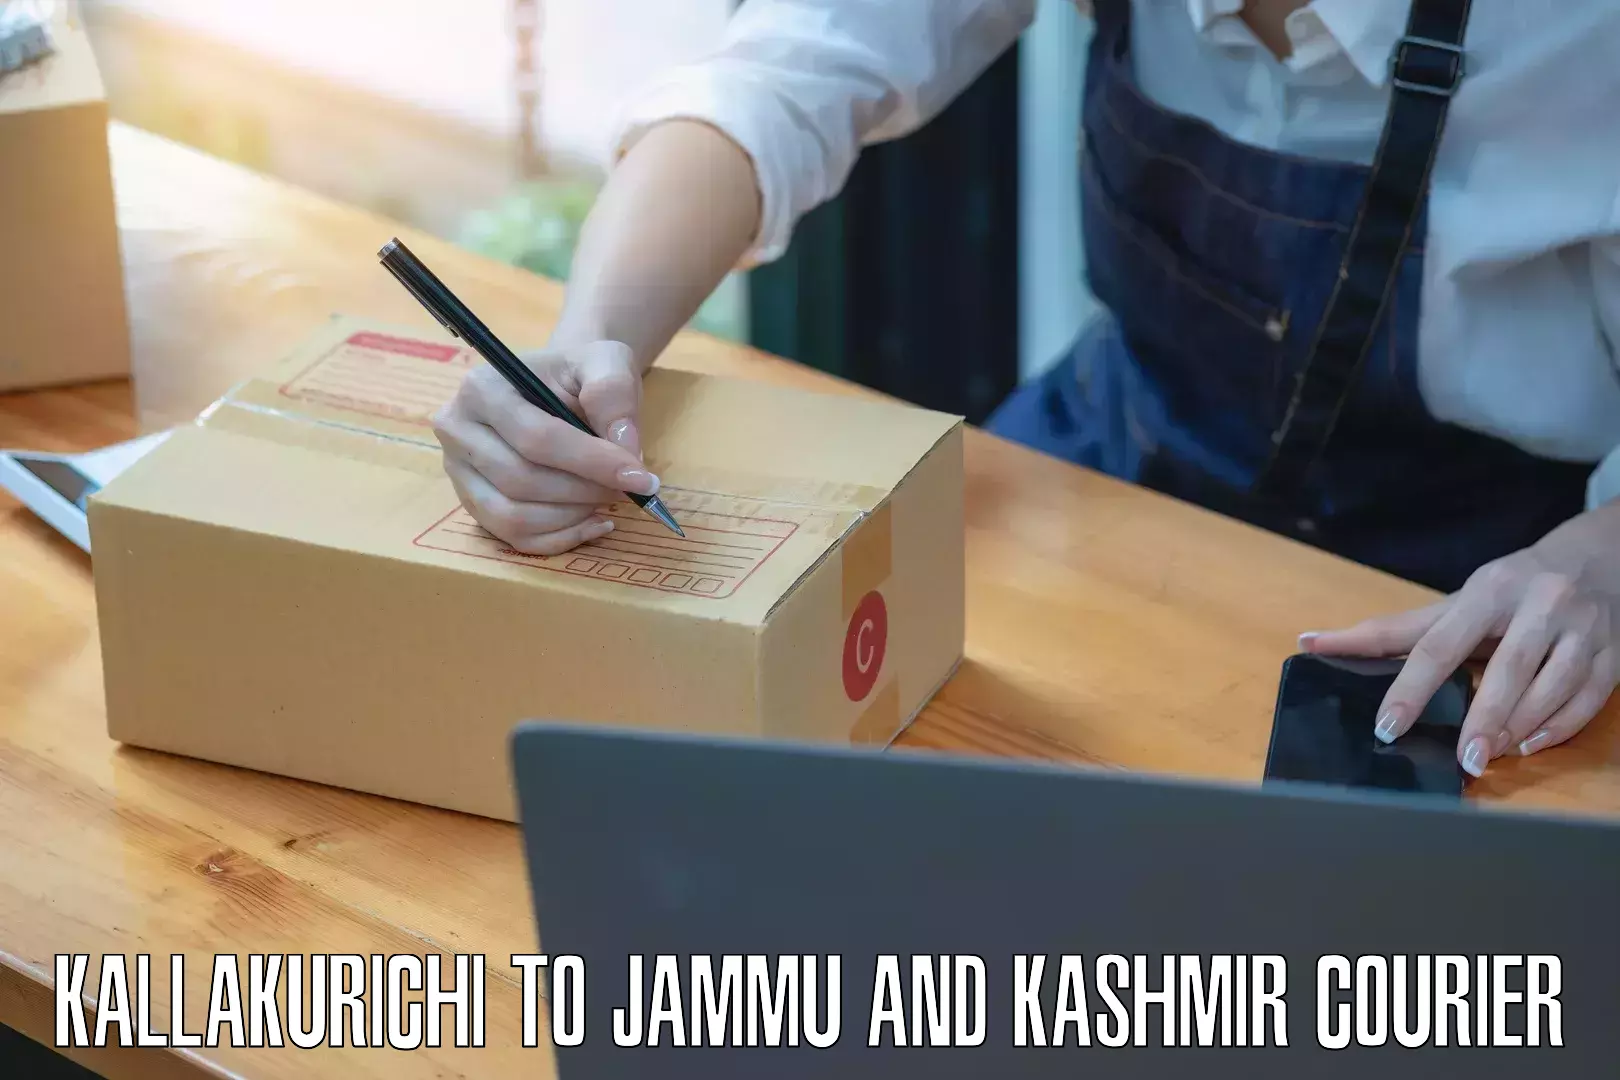 Courier service comparison Kallakurichi to University of Jammu